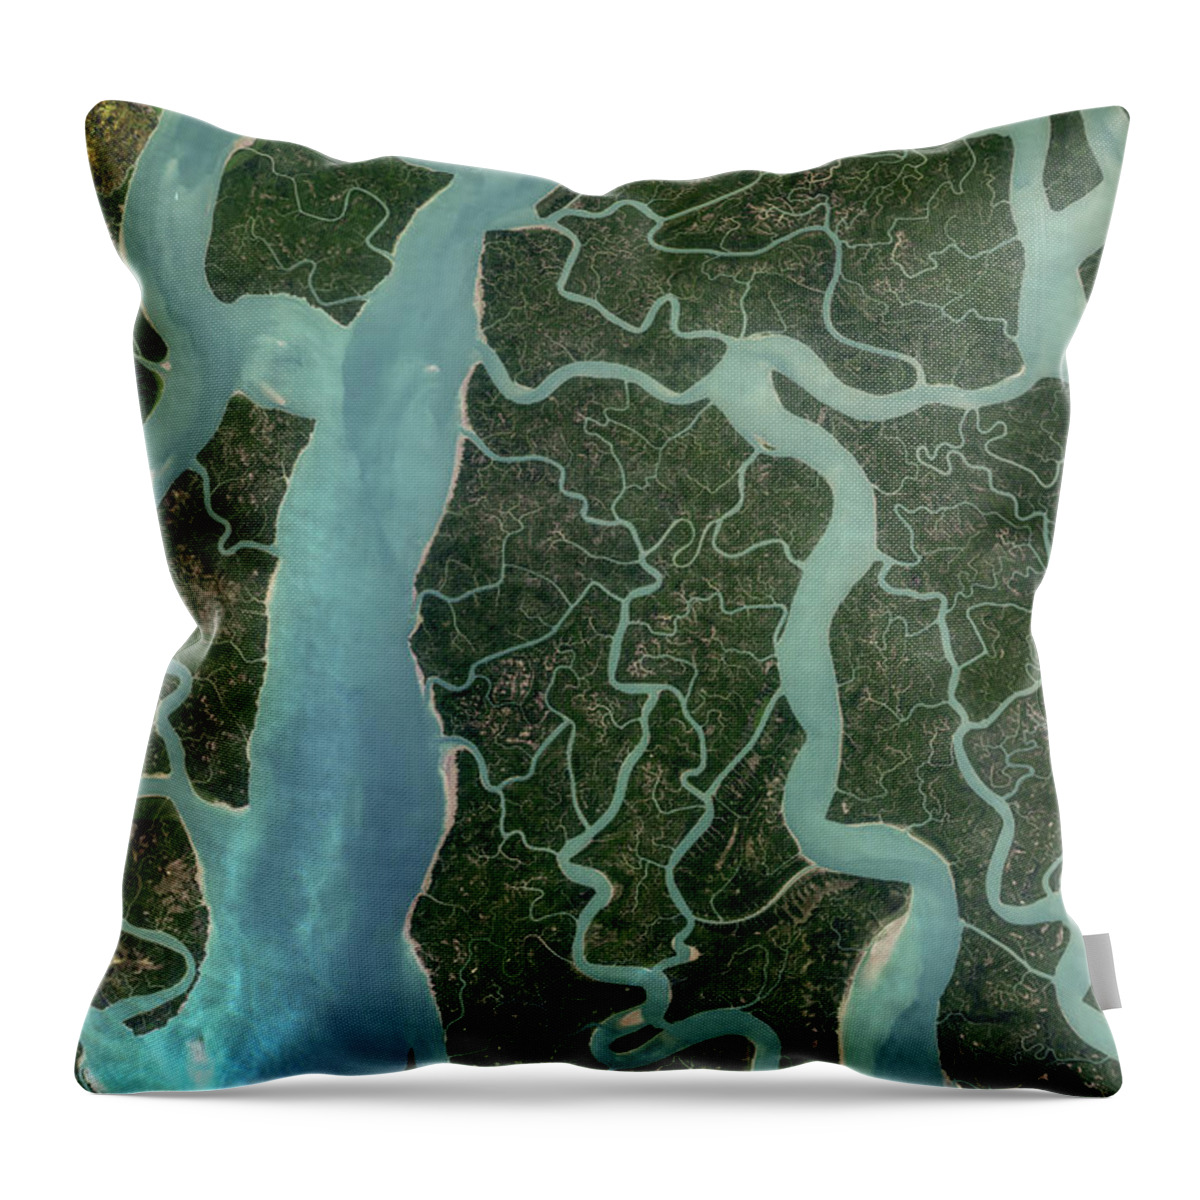 Satellite Image Throw Pillow featuring the digital art Sundarbans mangroves from space by Christian Pauschert